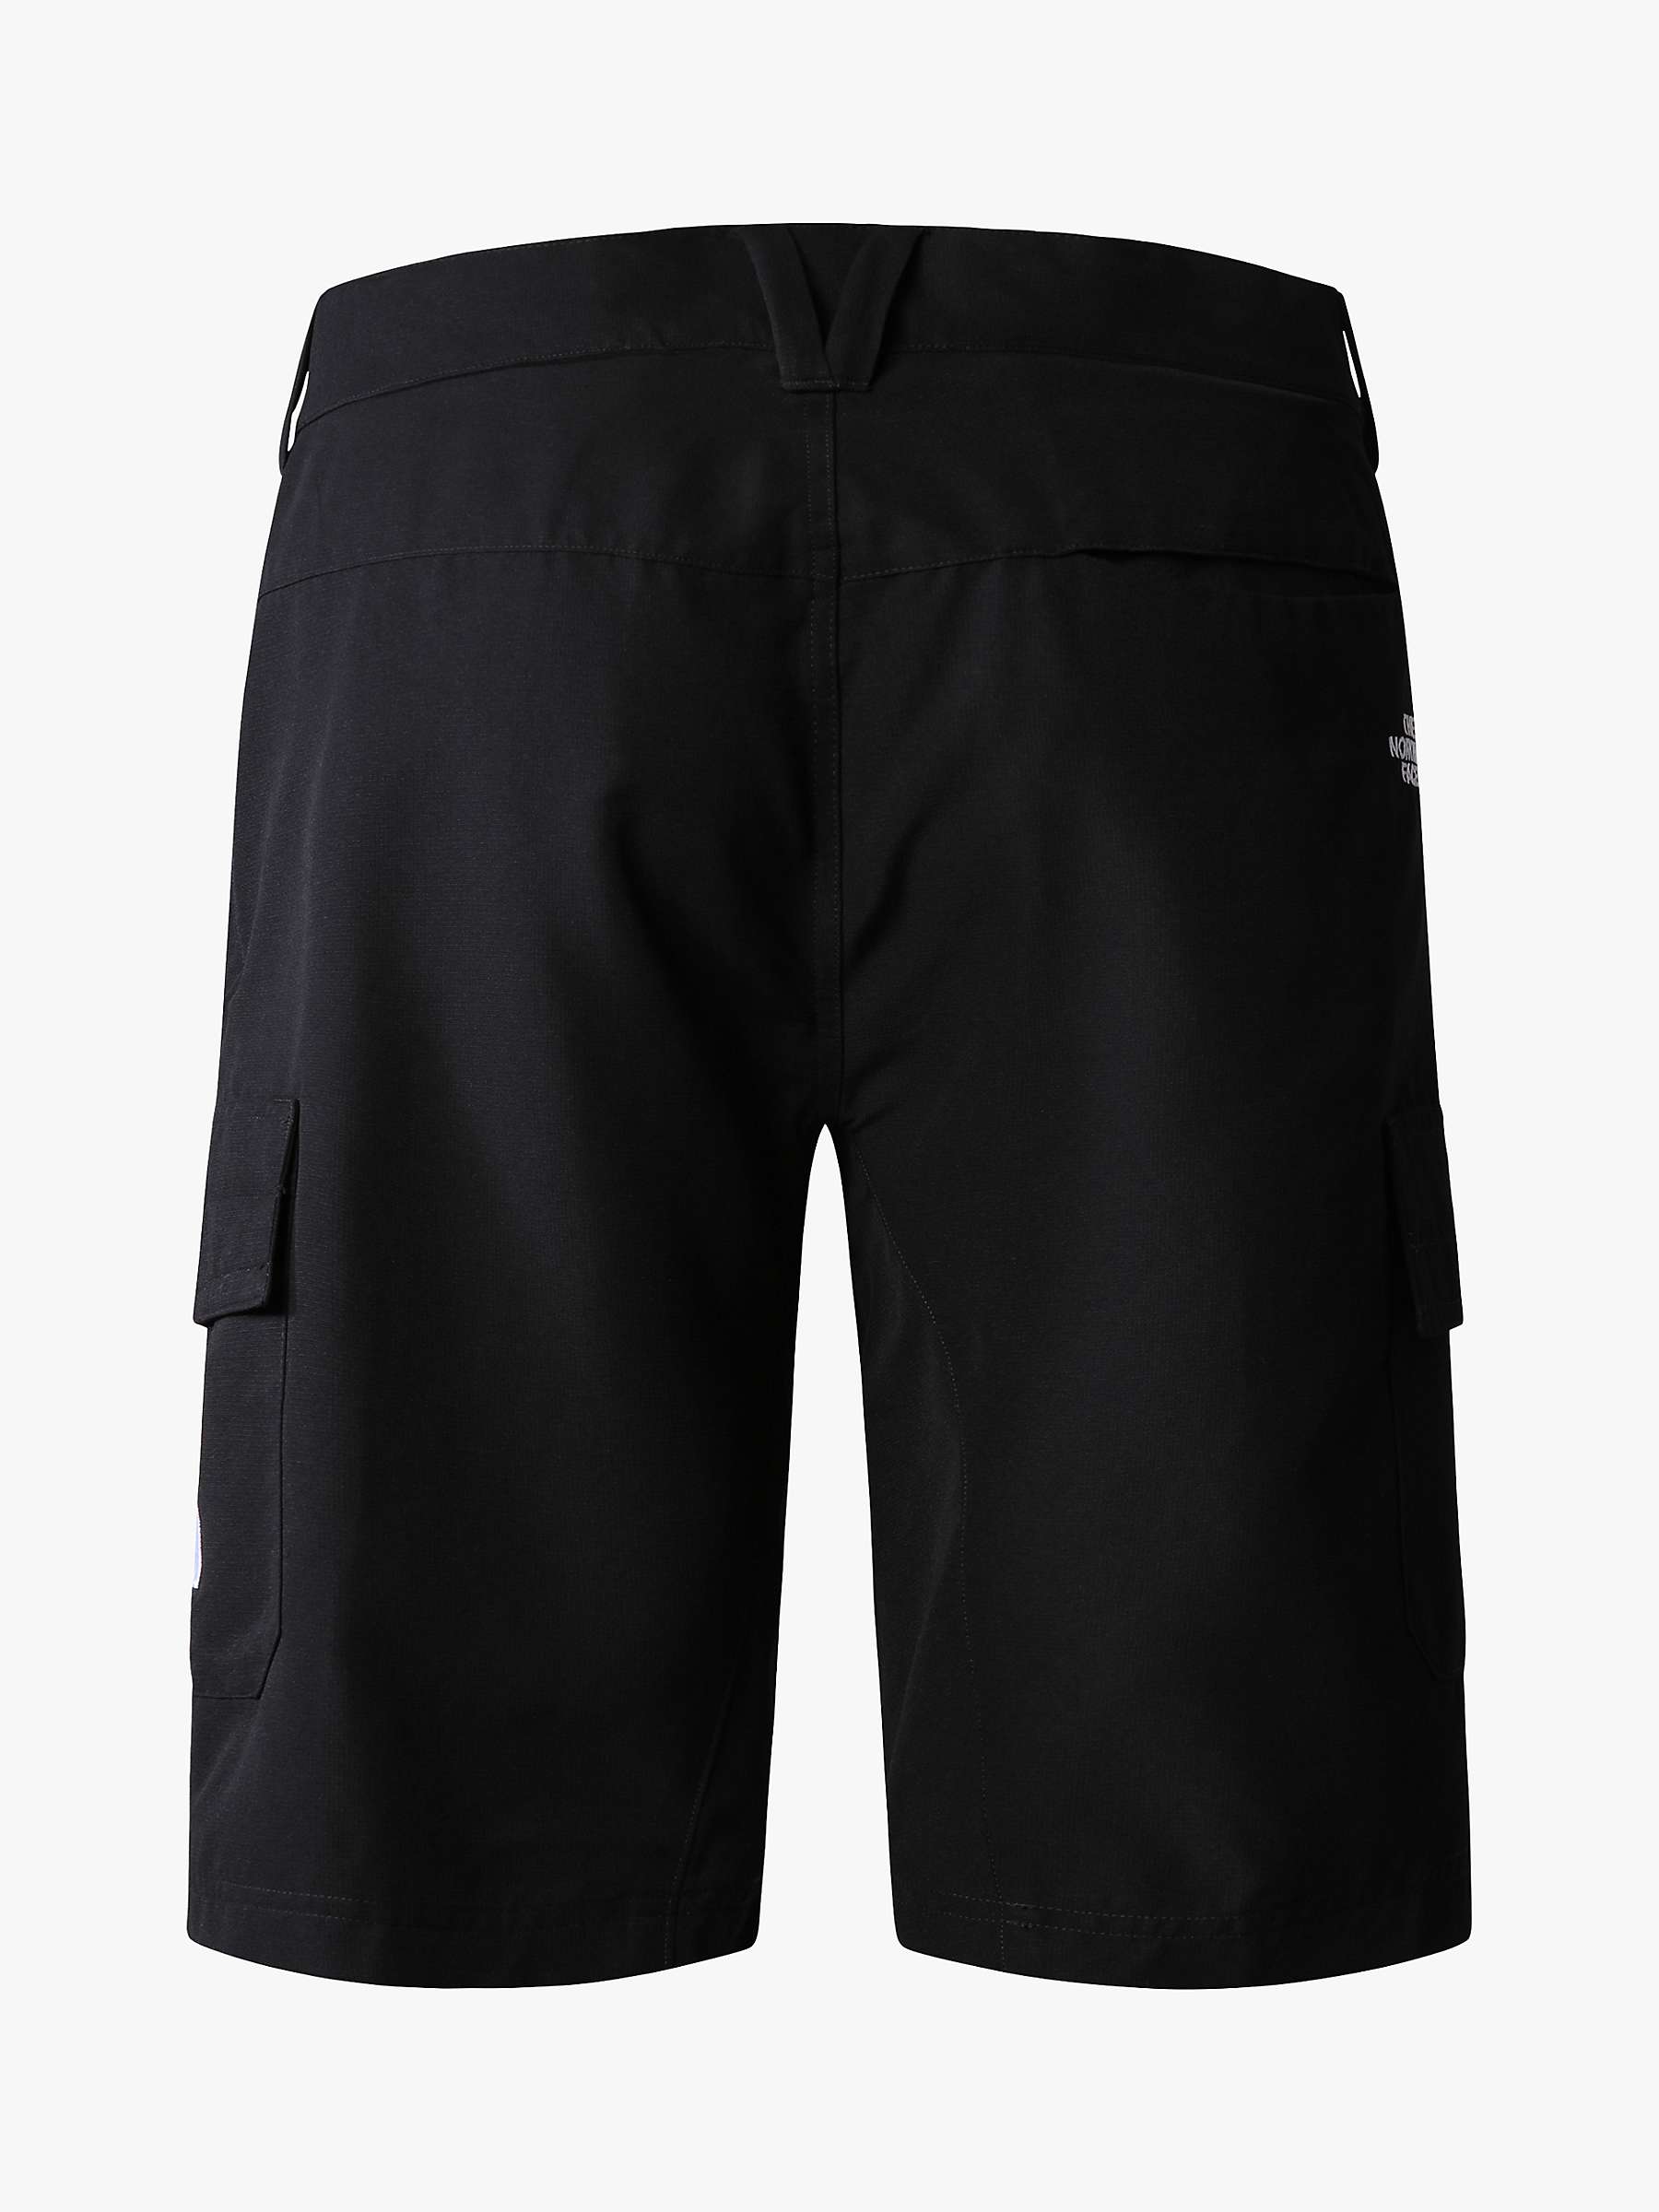 Buy The North Face Horizon Circular Shorts, Black Online at johnlewis.com